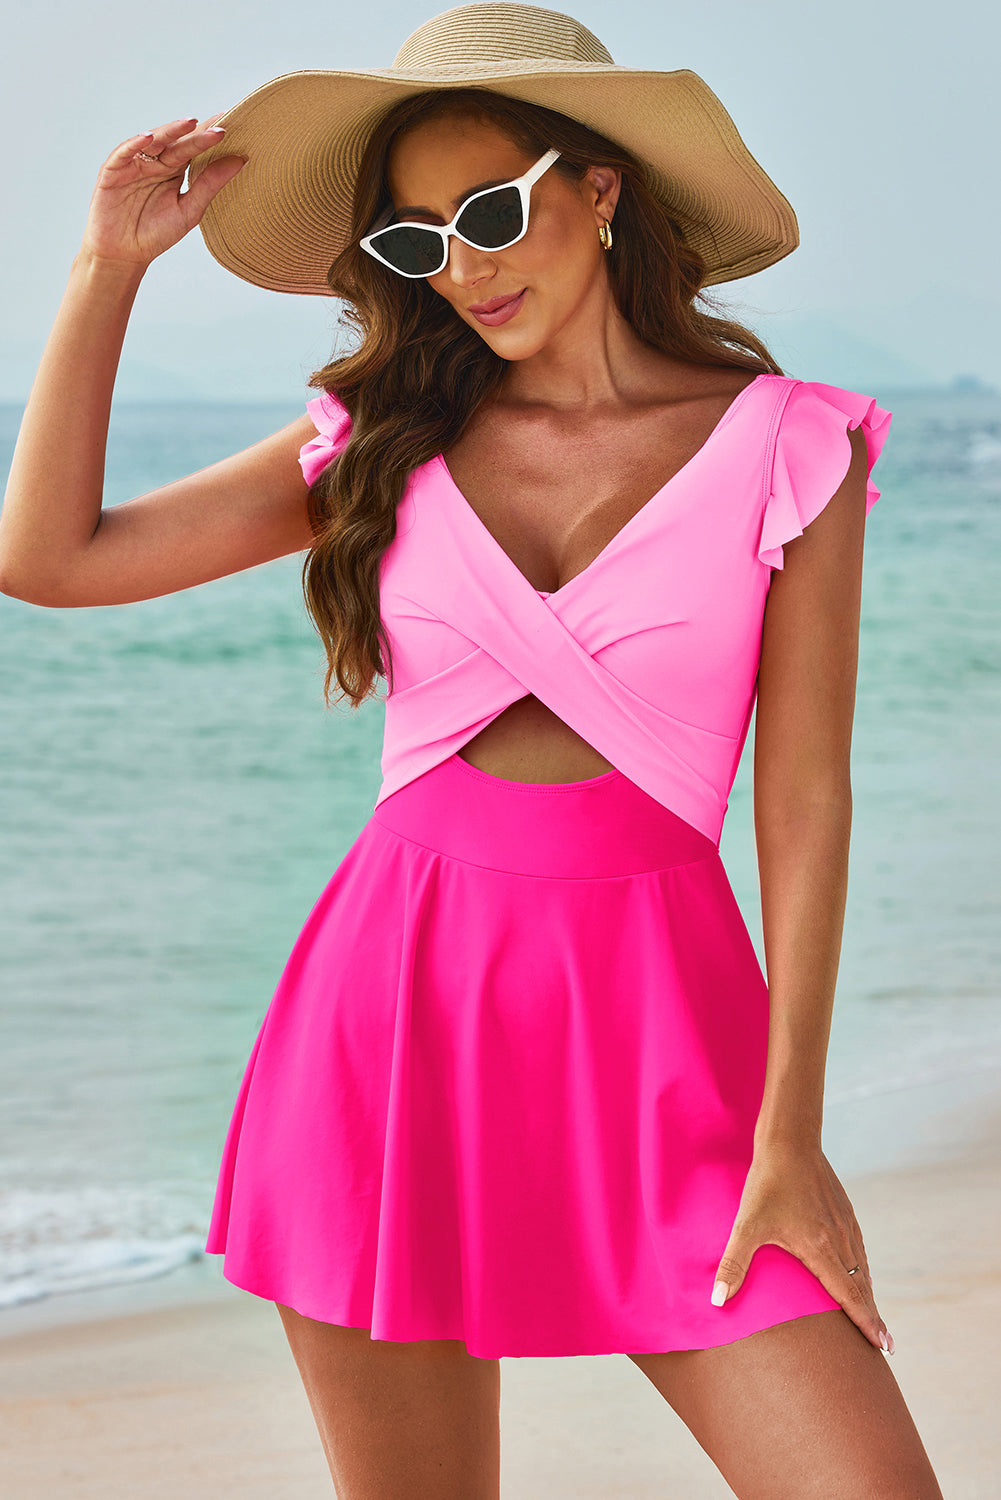 TEEK - Skirted V-Neck Ruffle Cap Sleeve One-Piece Swimwear SWIMWEAR TEEK Trend Pink S 